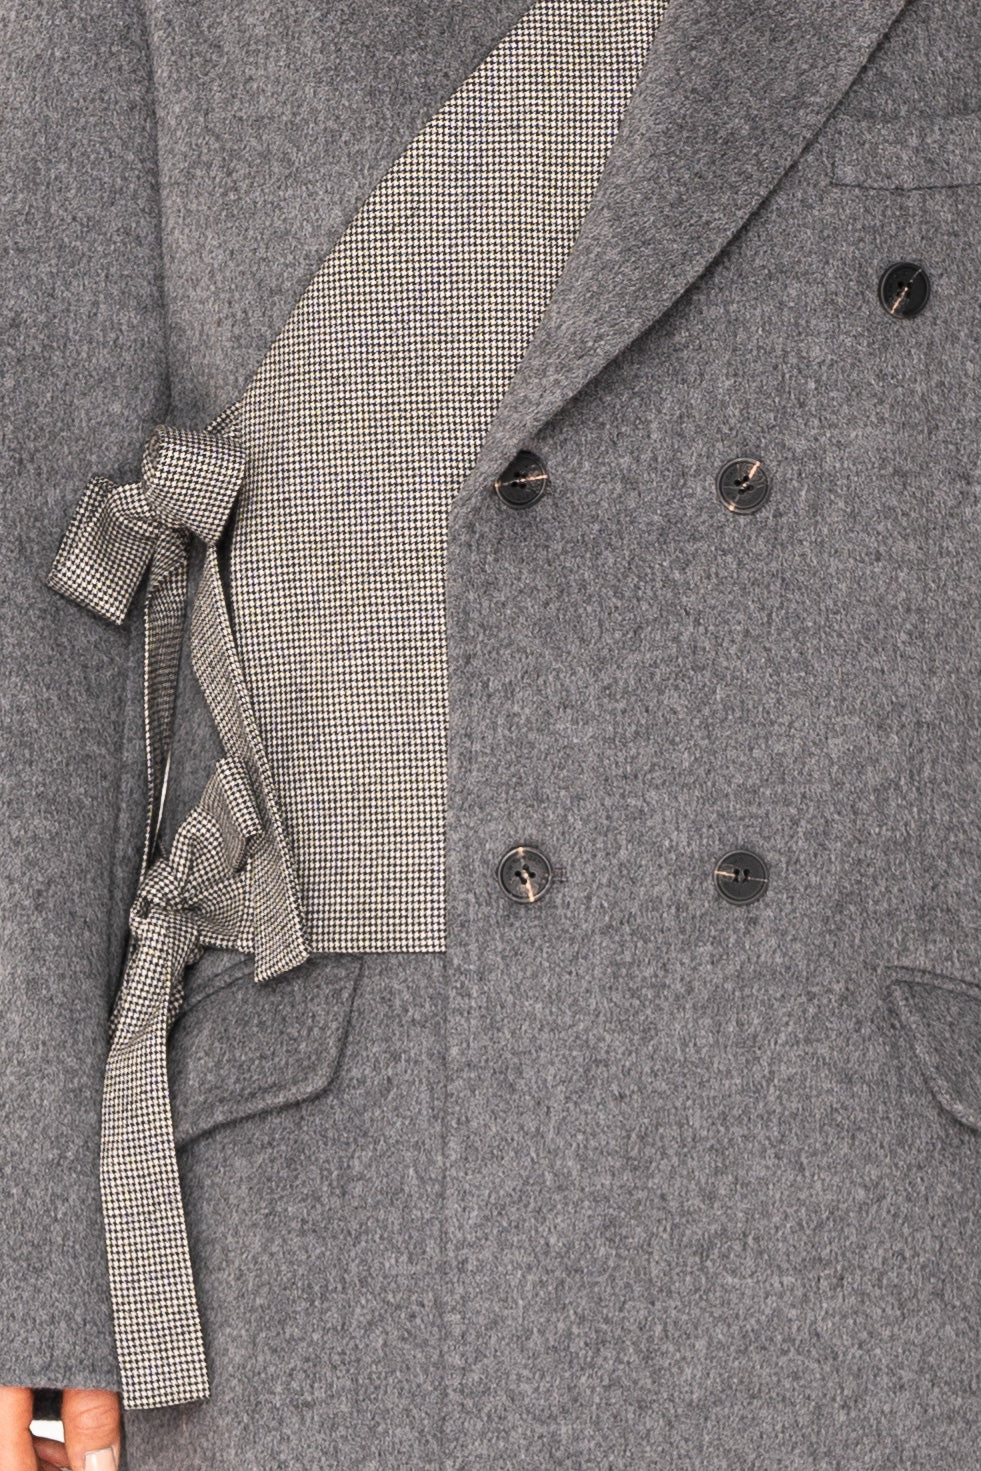 Heavy Wool Grey Double Breasted Coat